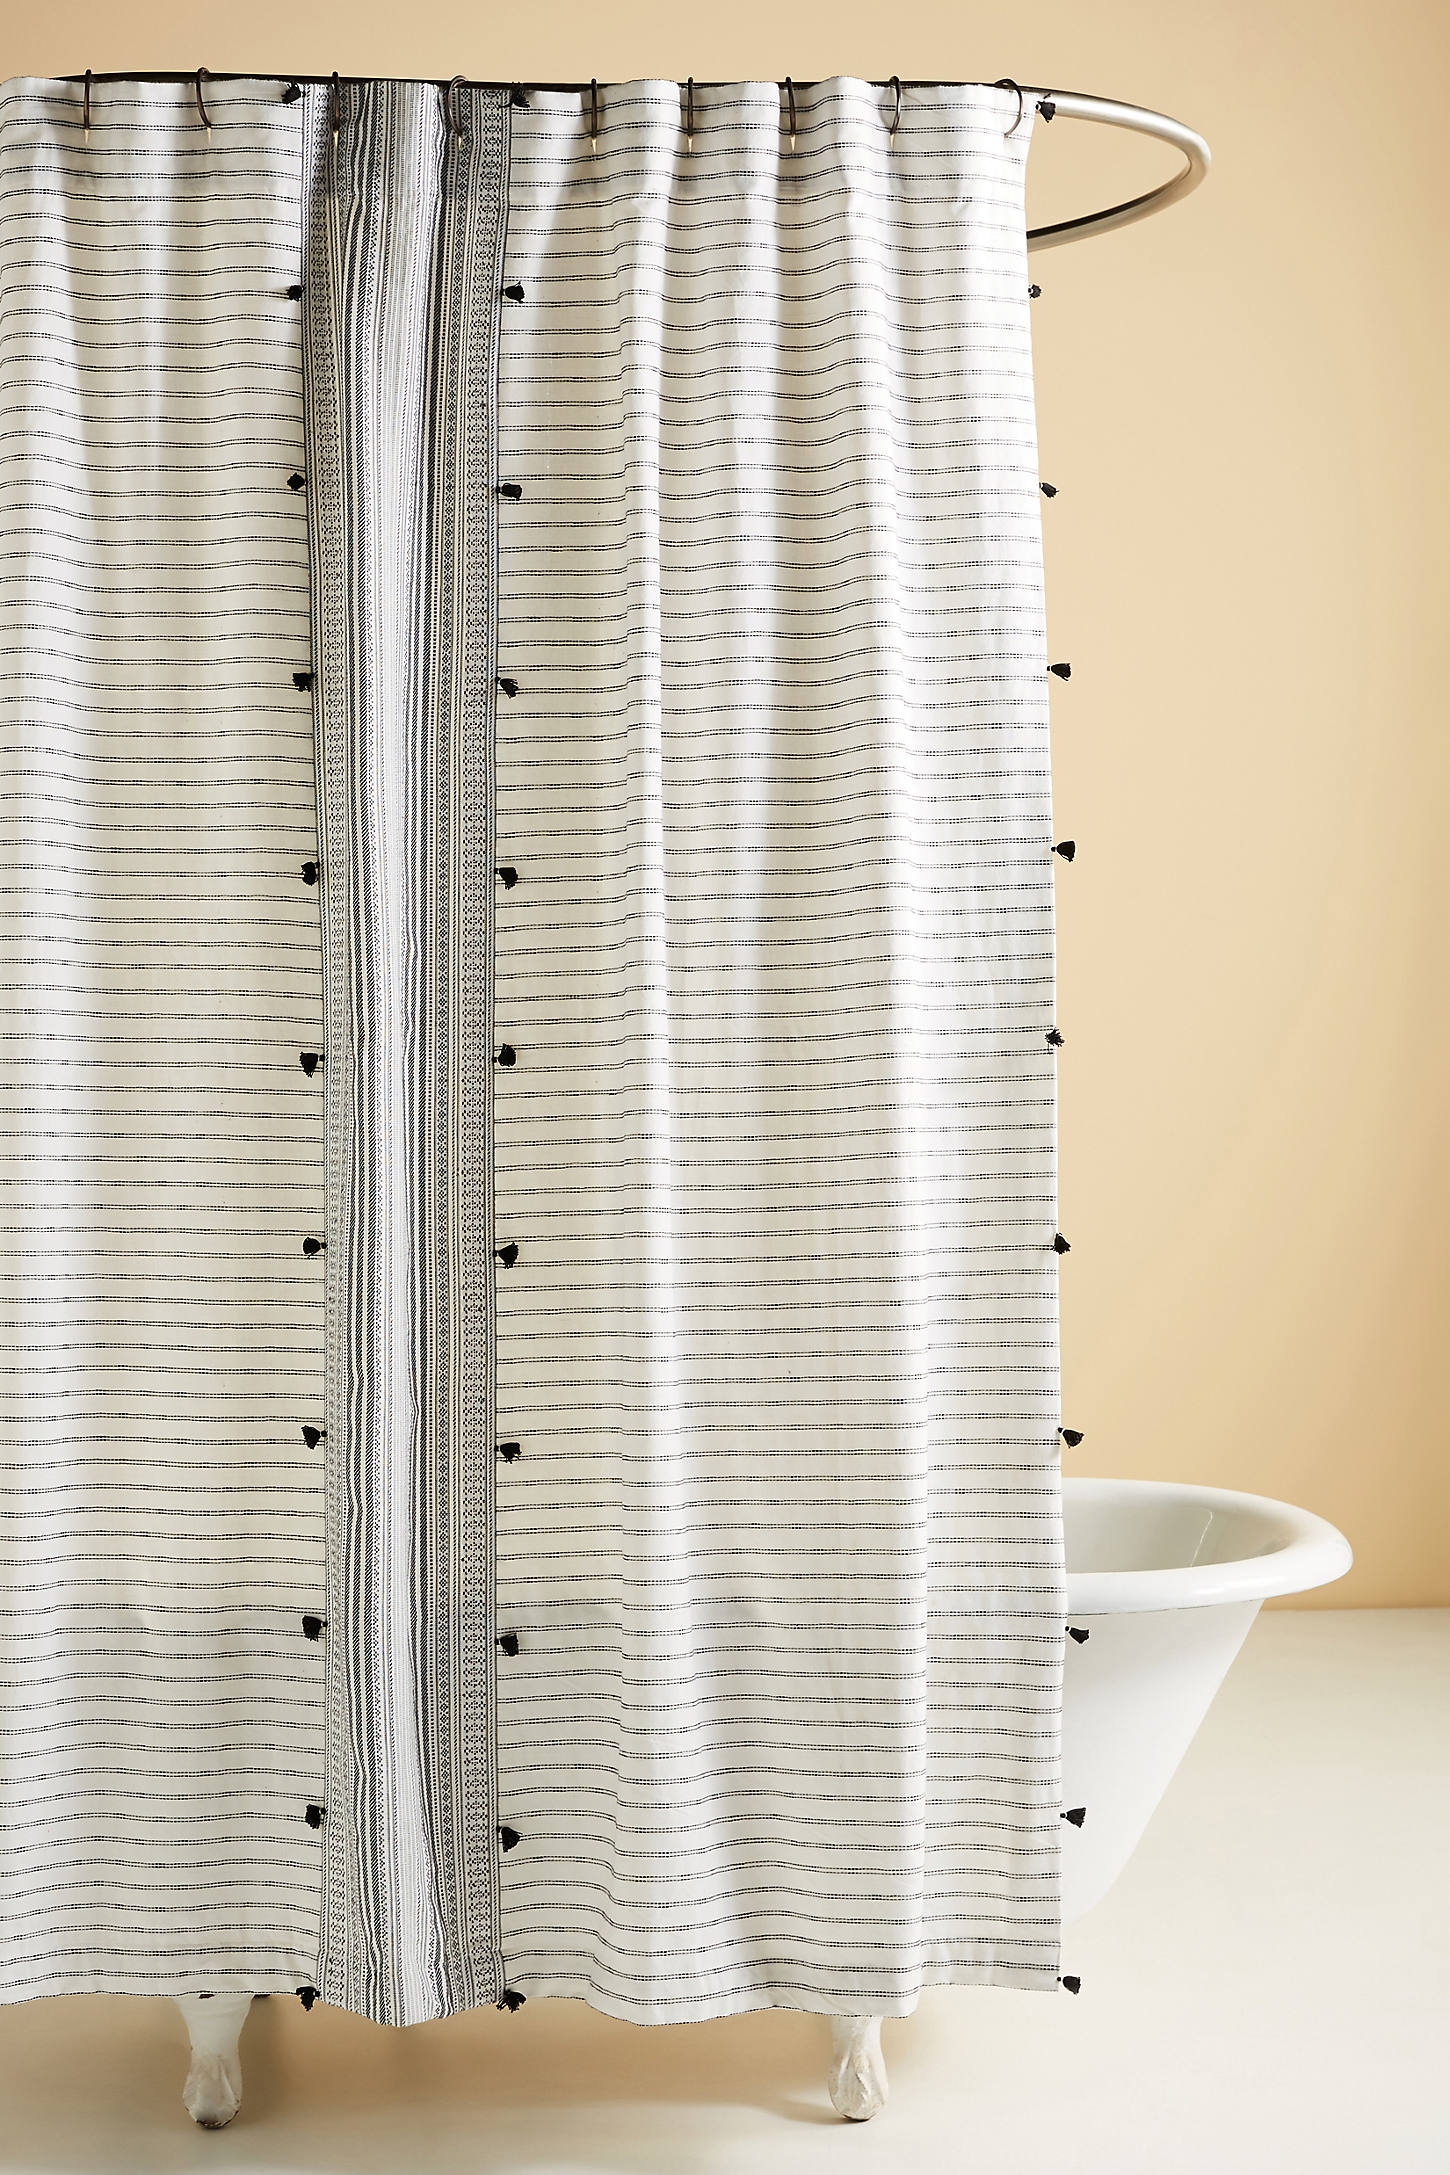 Tasseled Pendana Shower Curtain - Image 0